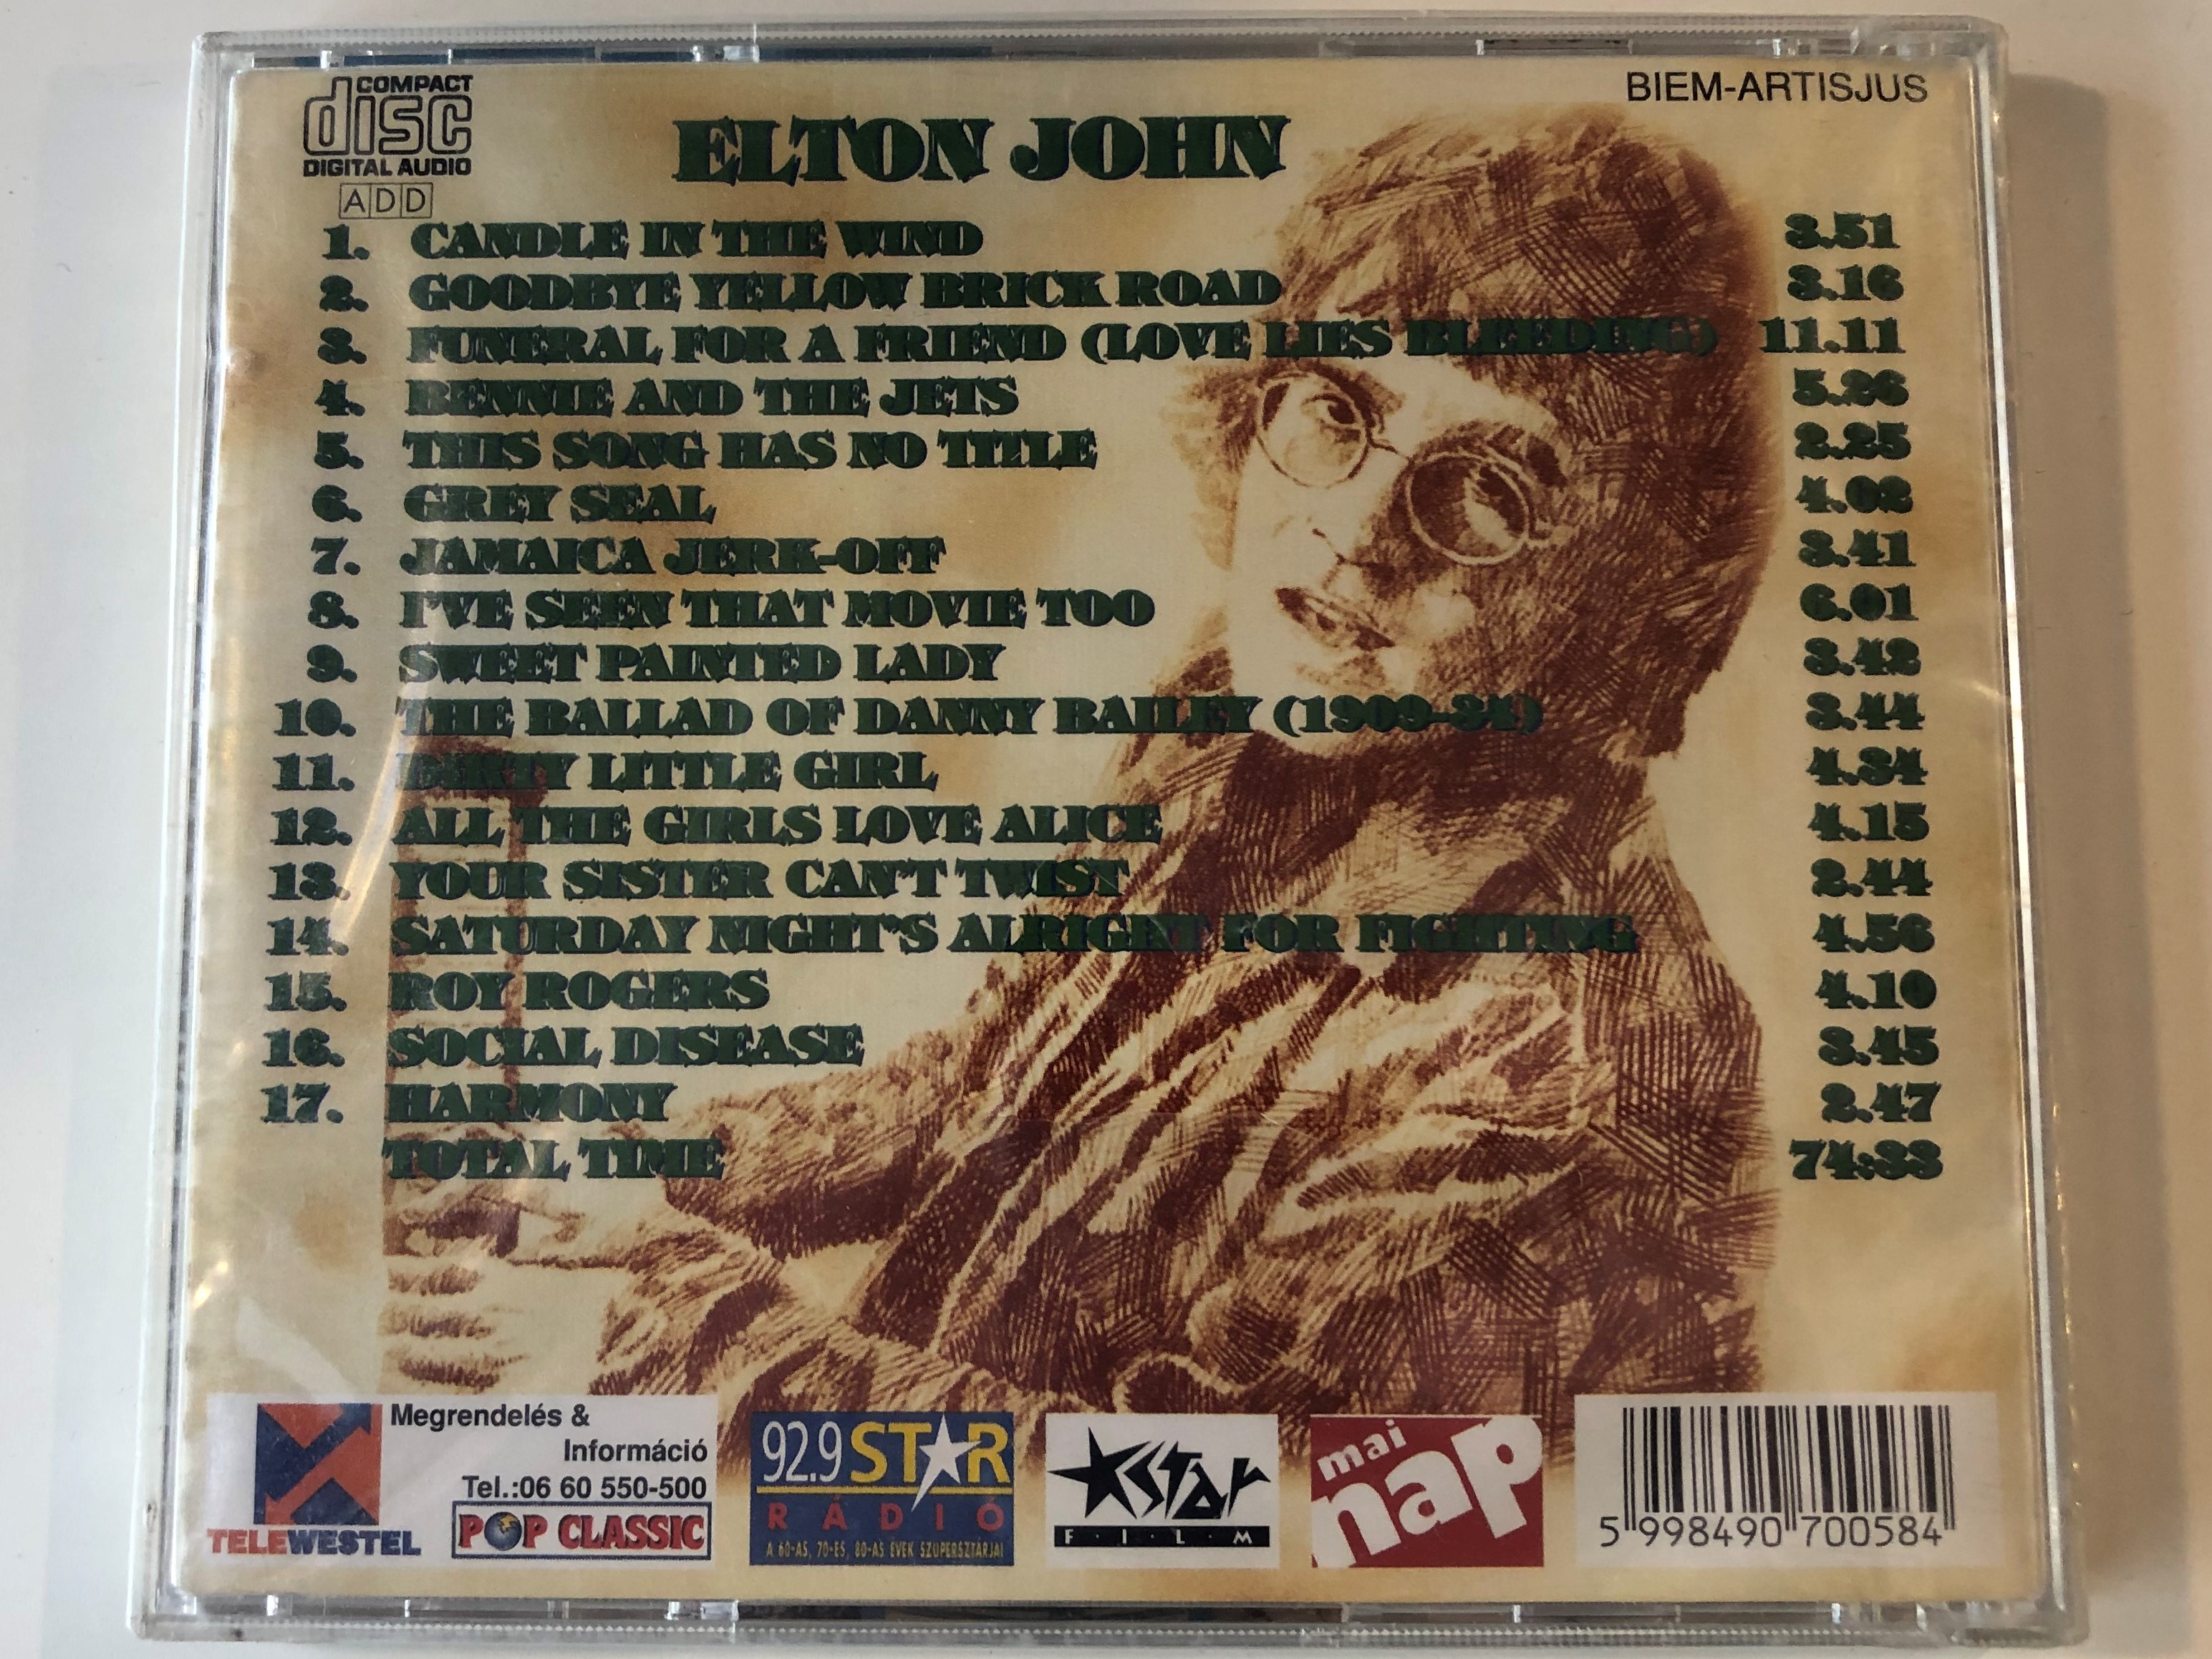 goodbye-yellow-brick-road-elton-john-pop-classic-audio-cd-5998490700584-2-.jpg